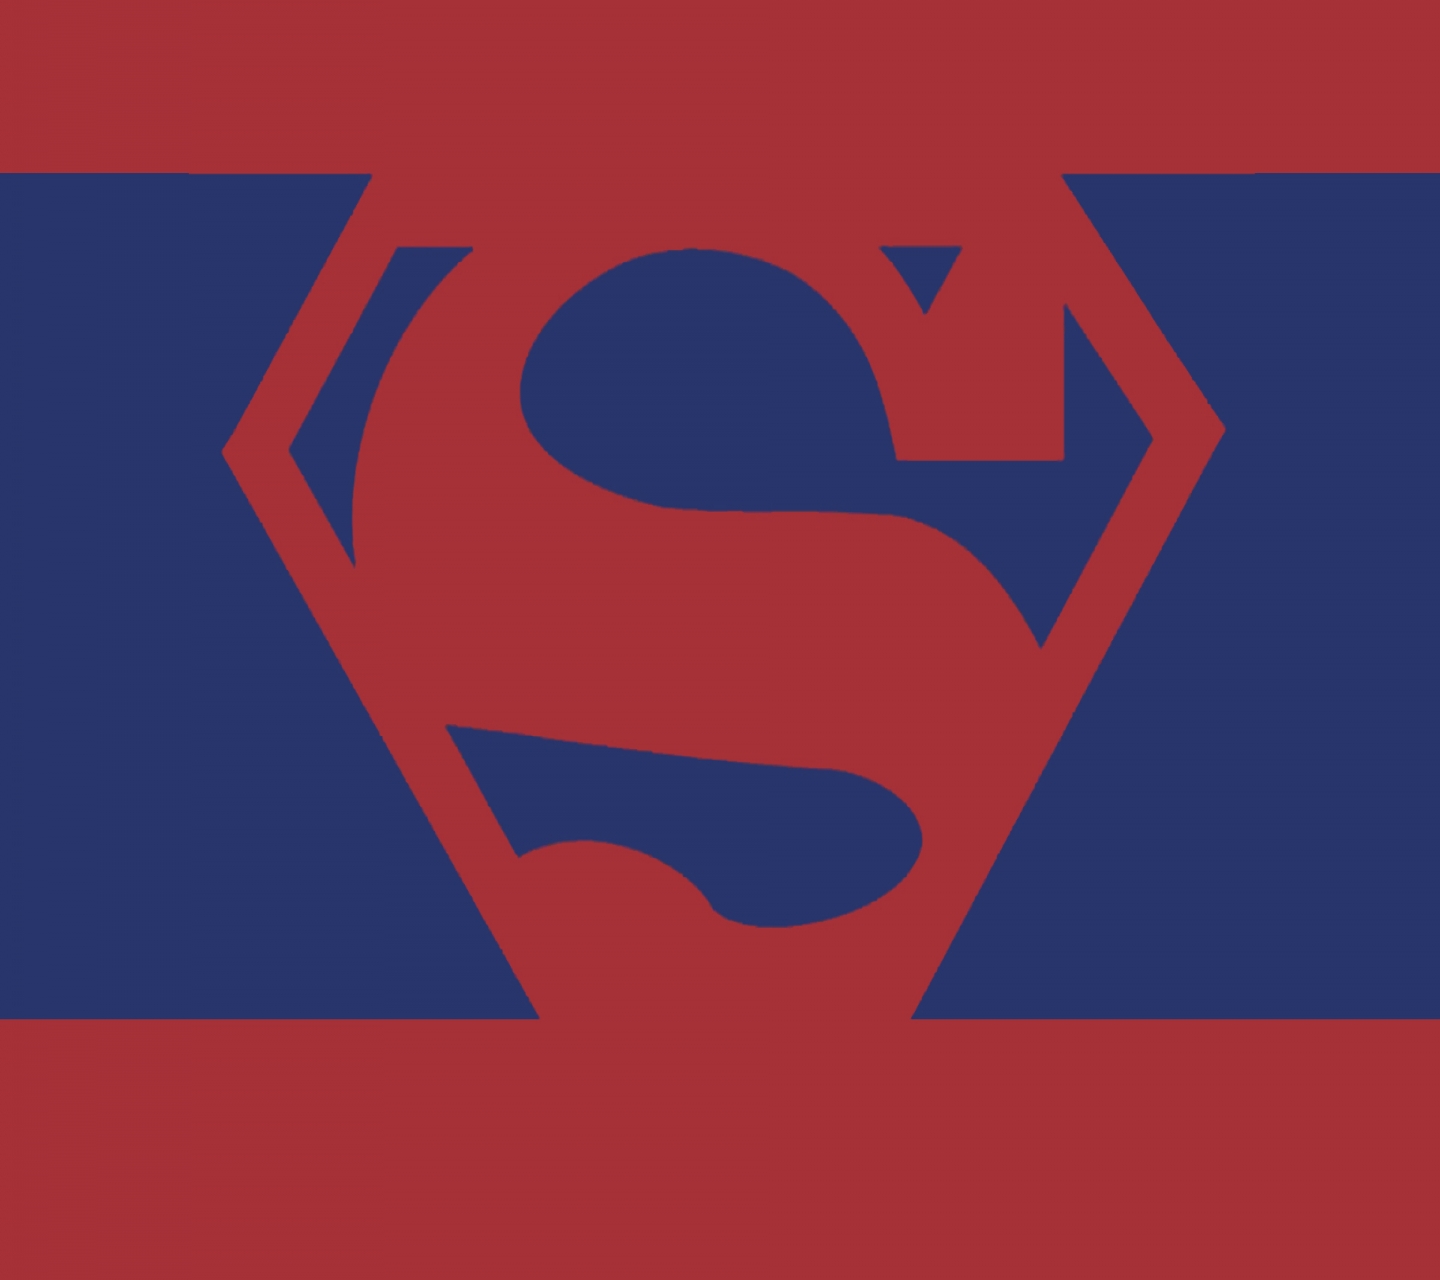 Скачать обои бесплатно Комиксы, Супермен, Логотип Супермена картинка на рабочий стол ПК